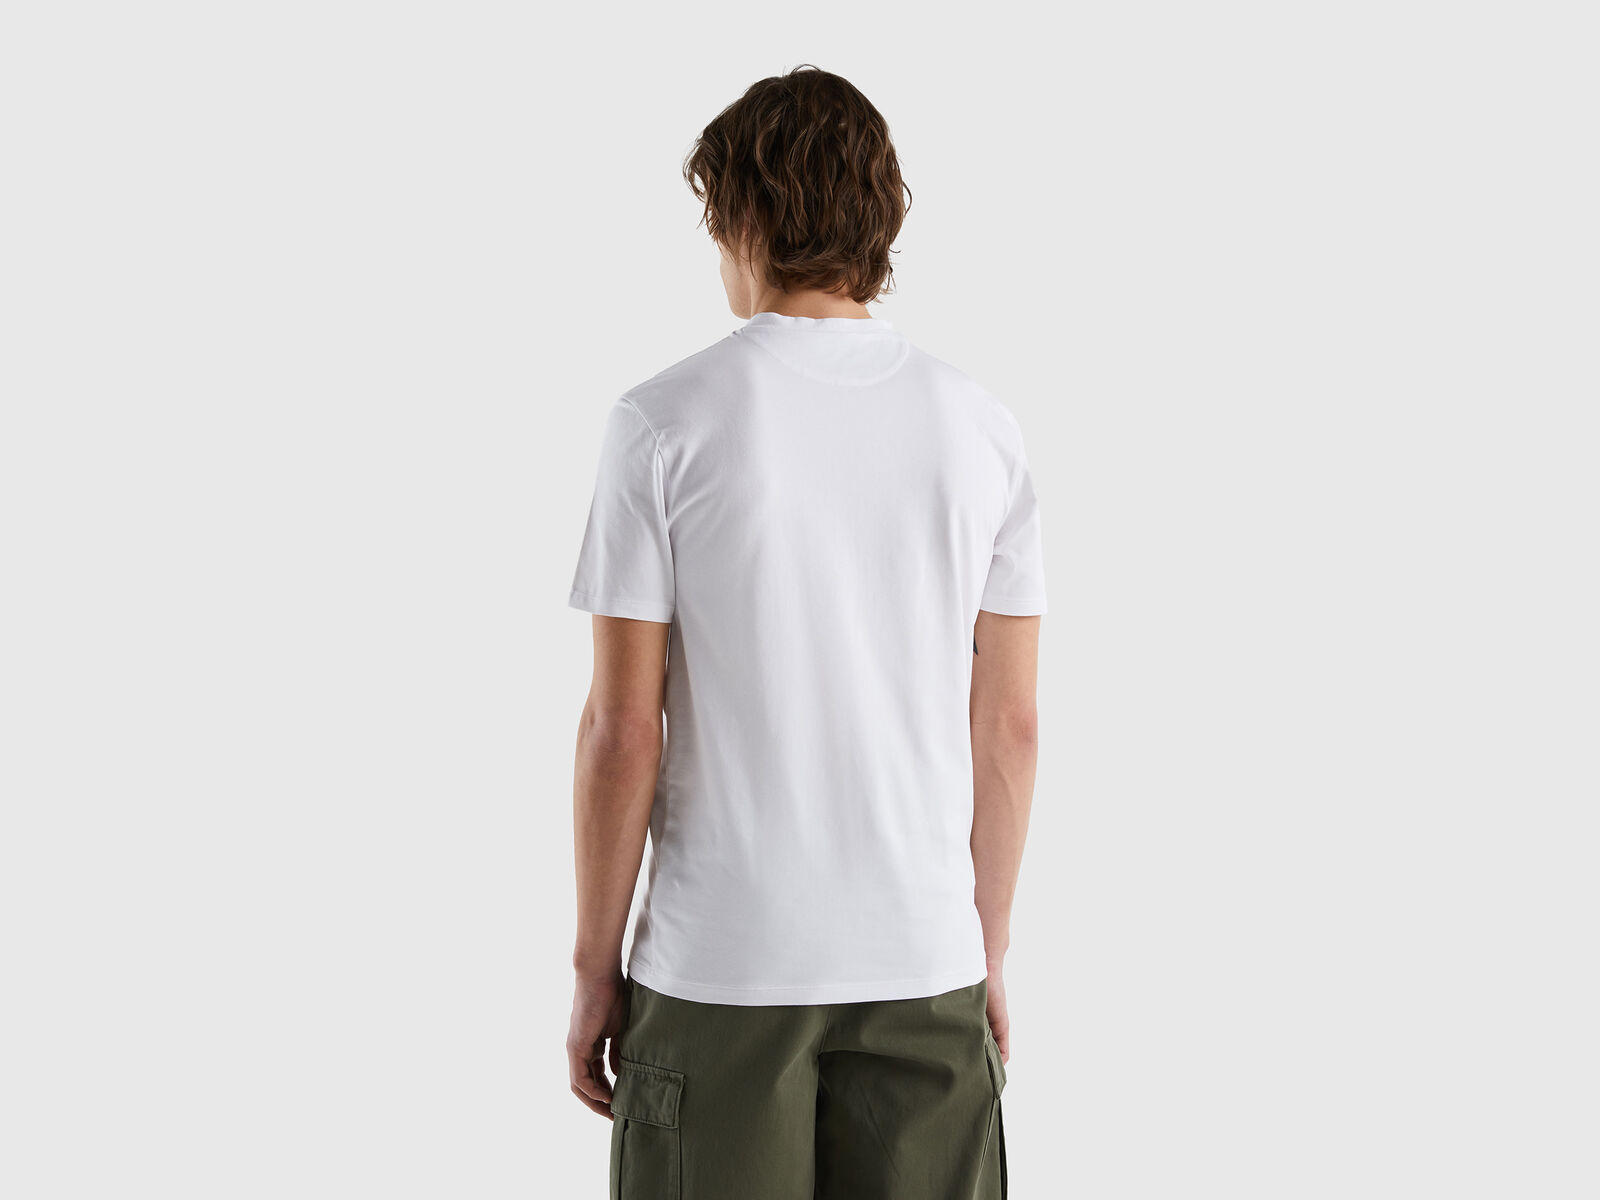 fit - Benetton stretch | White Slim t-shirt cotton in